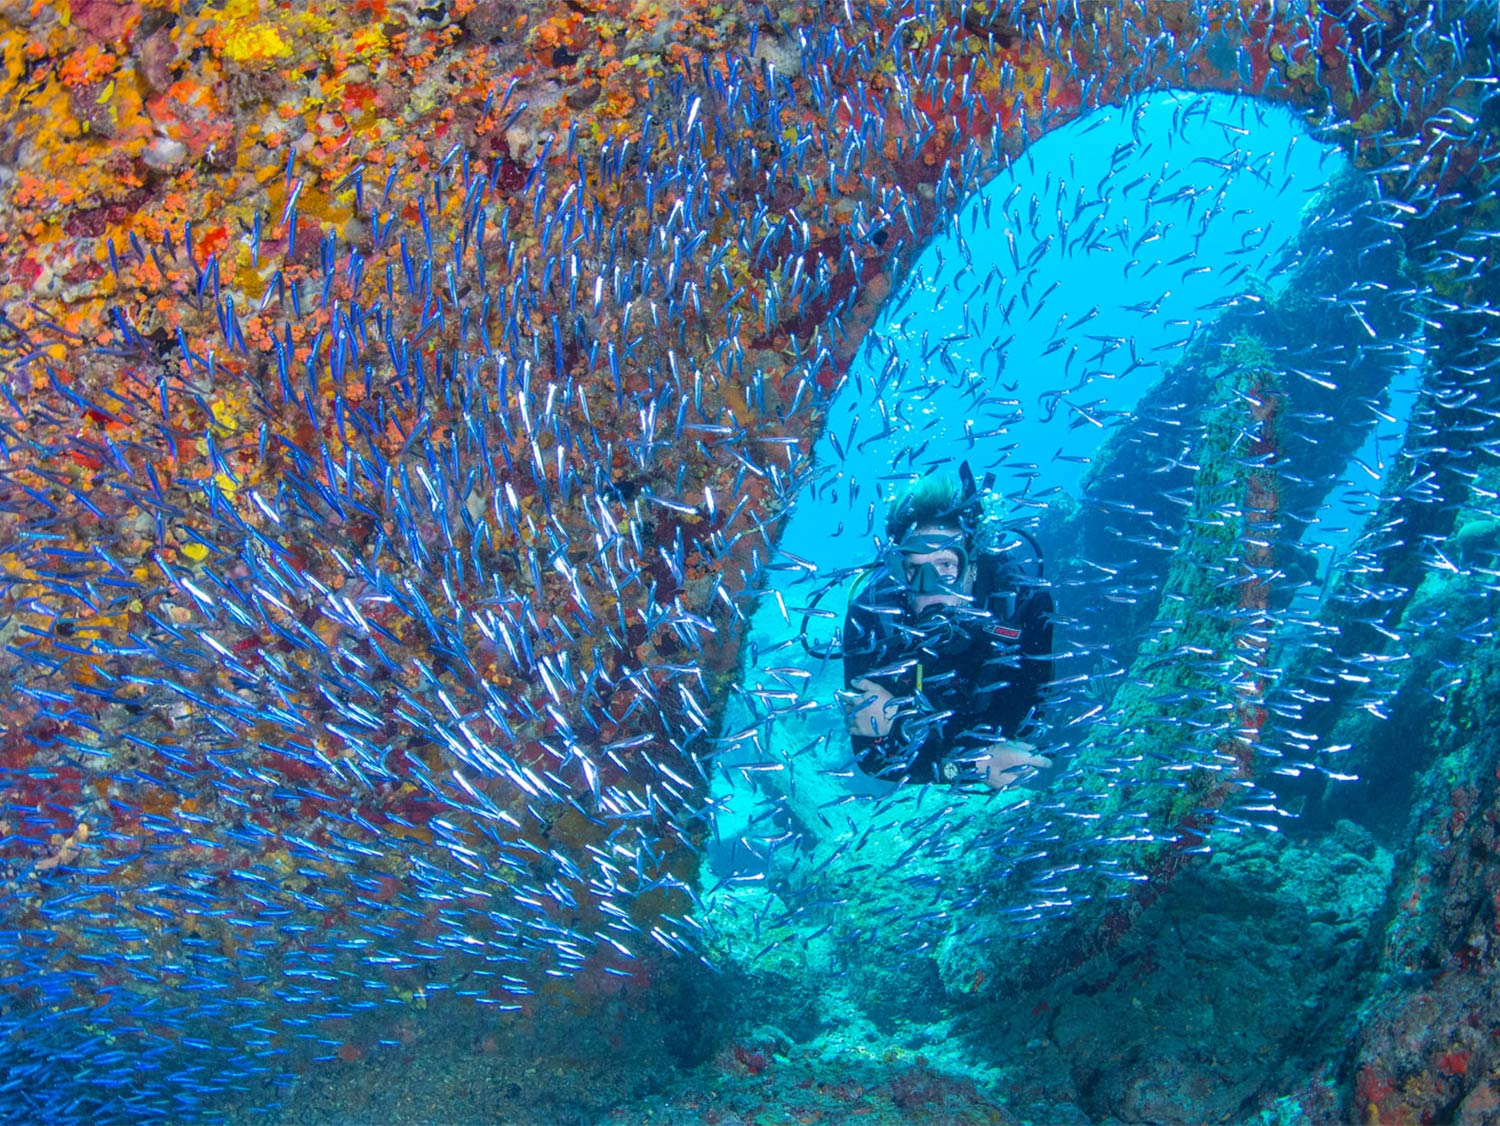 A person scuba-diving through a school of fish in a shipwreck.